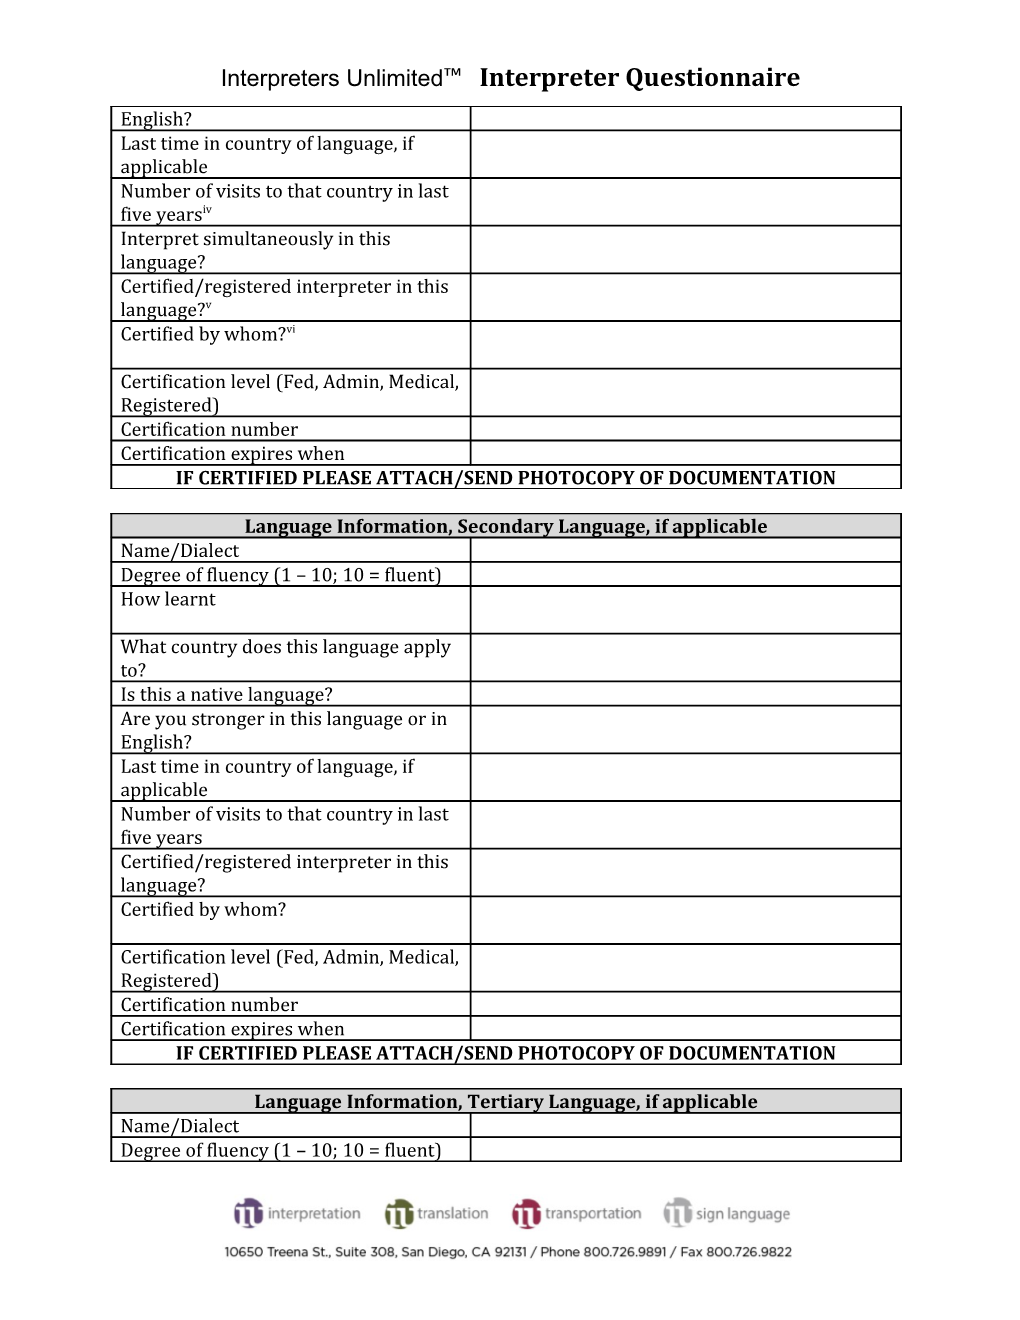 Interpreters Unlimited Interpreter Questionnaire